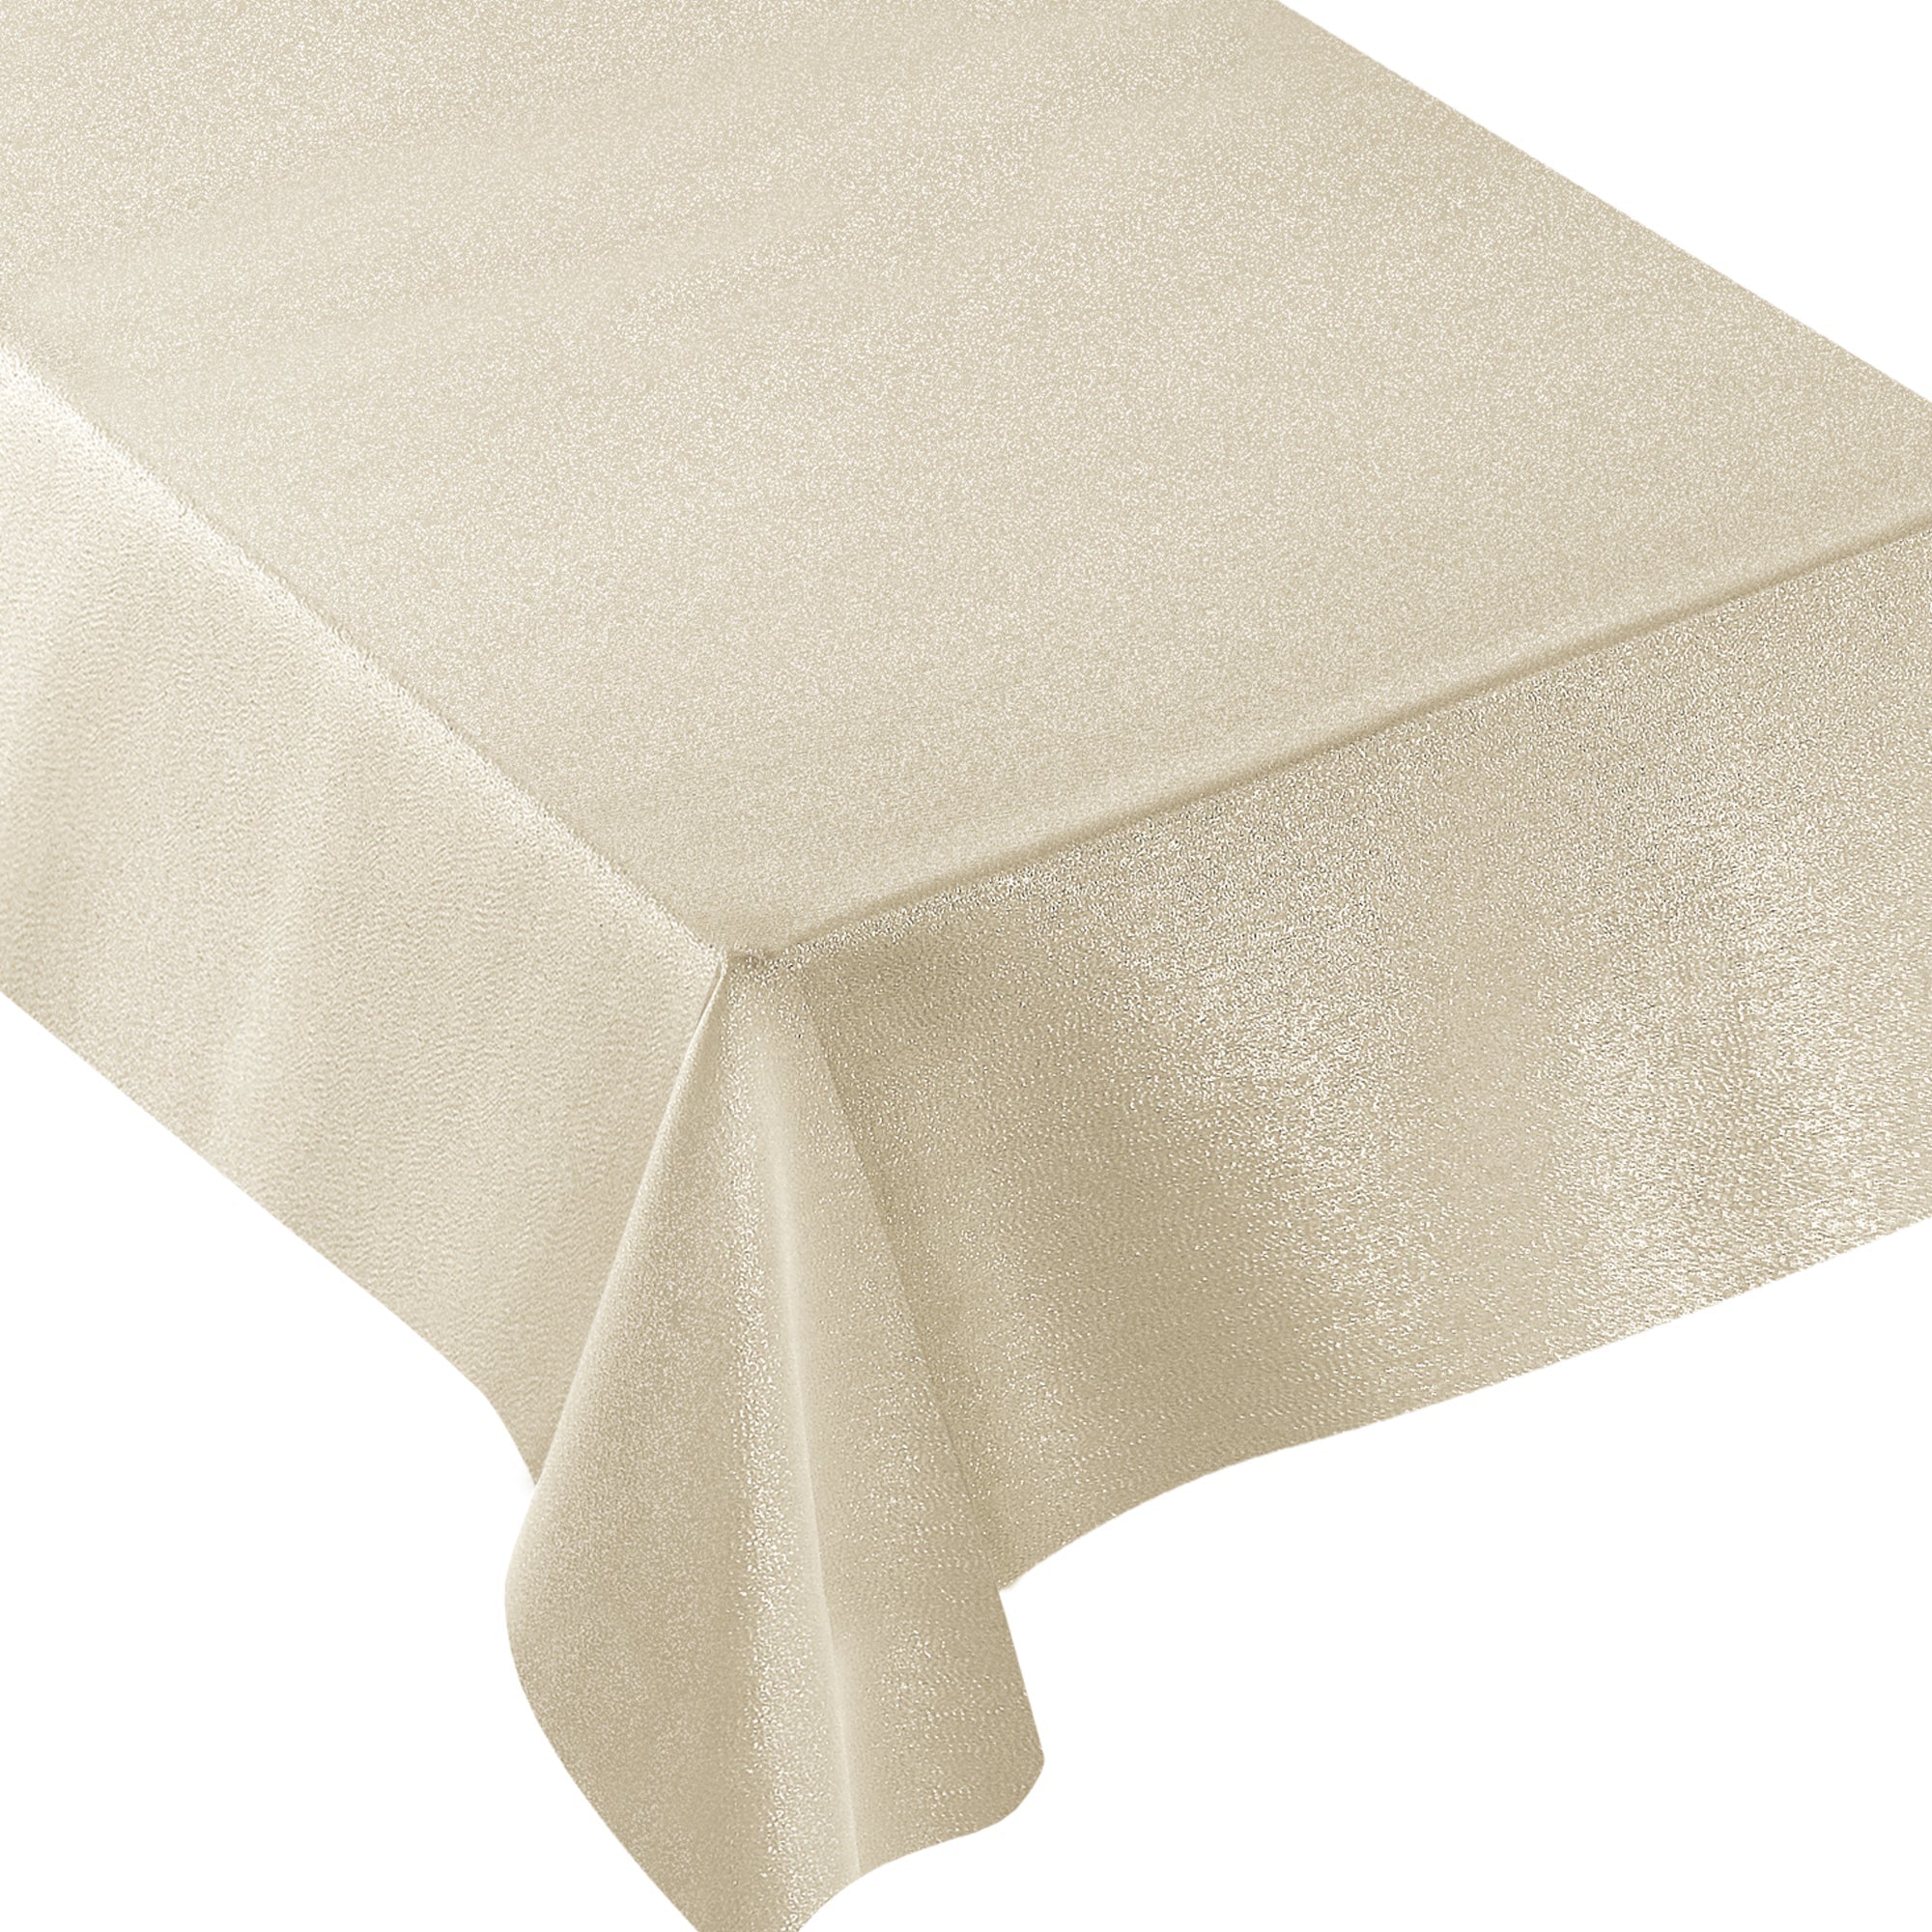 Metallic Fabric Table Cover  Beige  60x84in